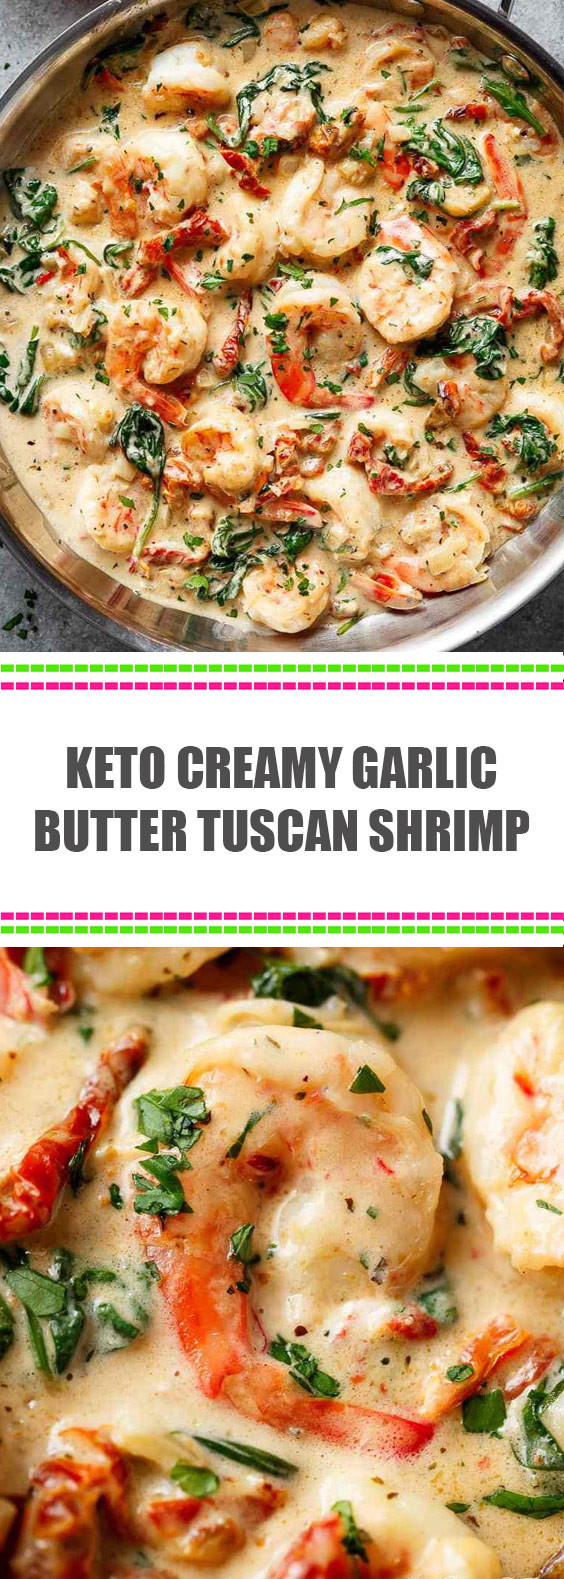 Creamy Garlic Tuscan Shrimp Keto
 Keto Creamy Garlic Butter Tuscan Shrimp